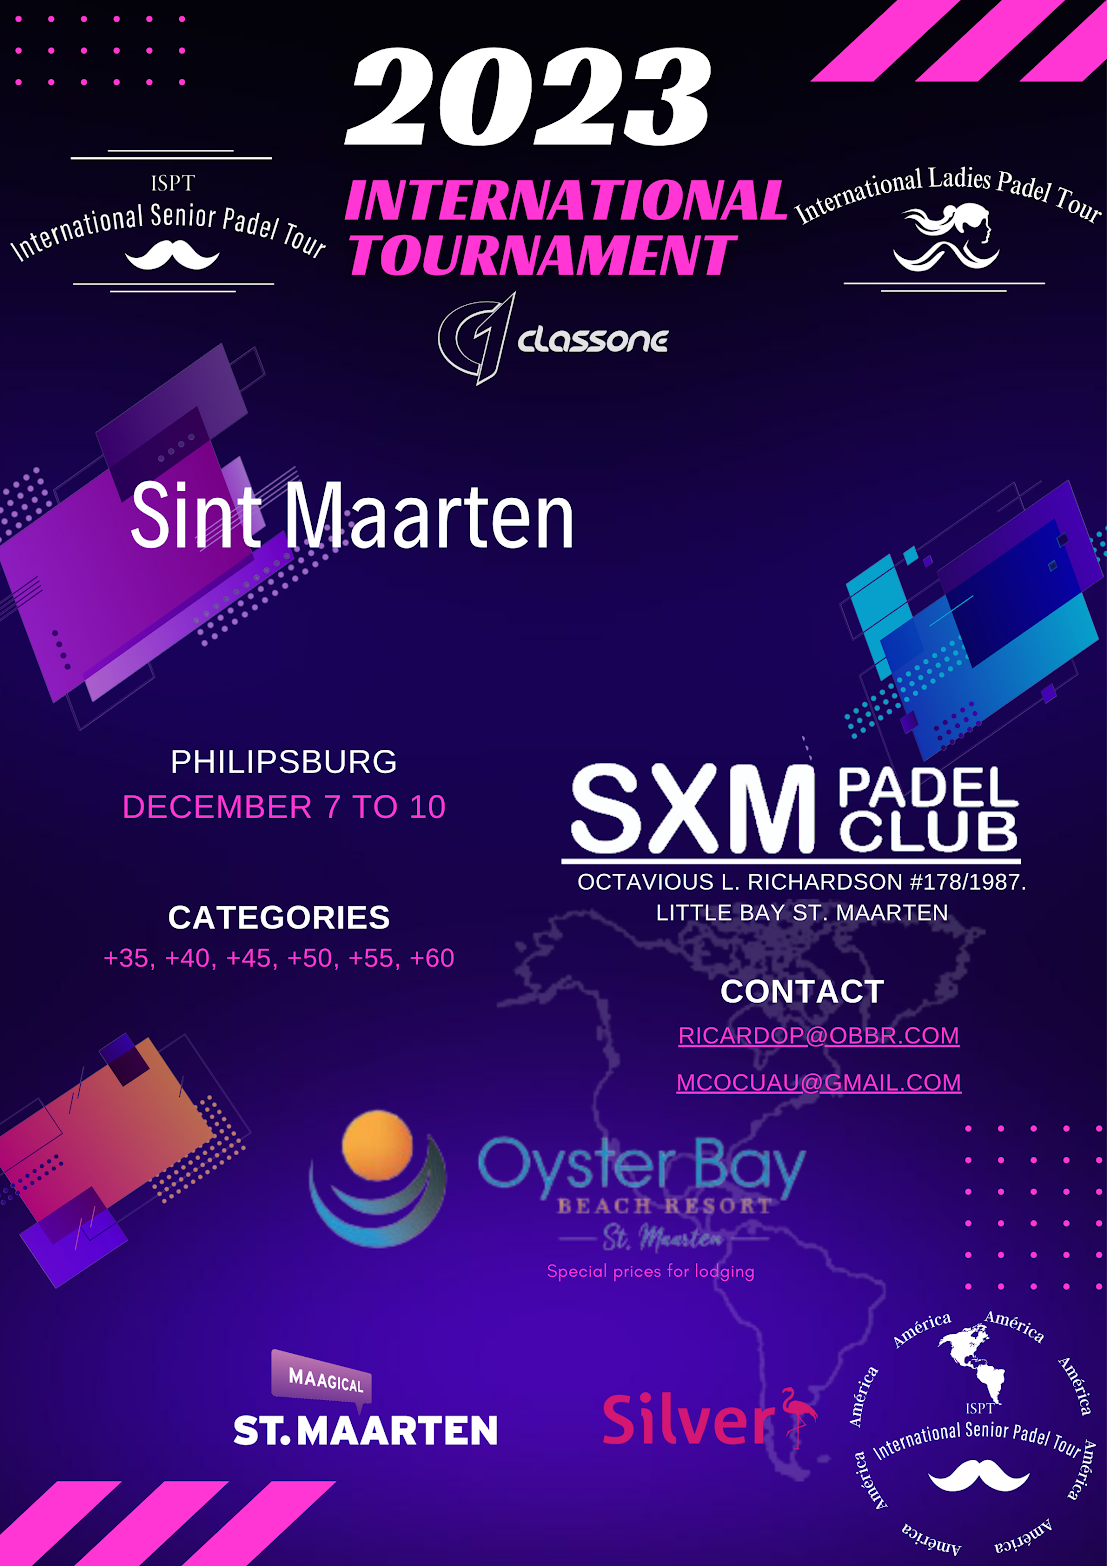 Announcement for the International Senior Padel Tour Tournament at the SXM Padel Club in Bel Air